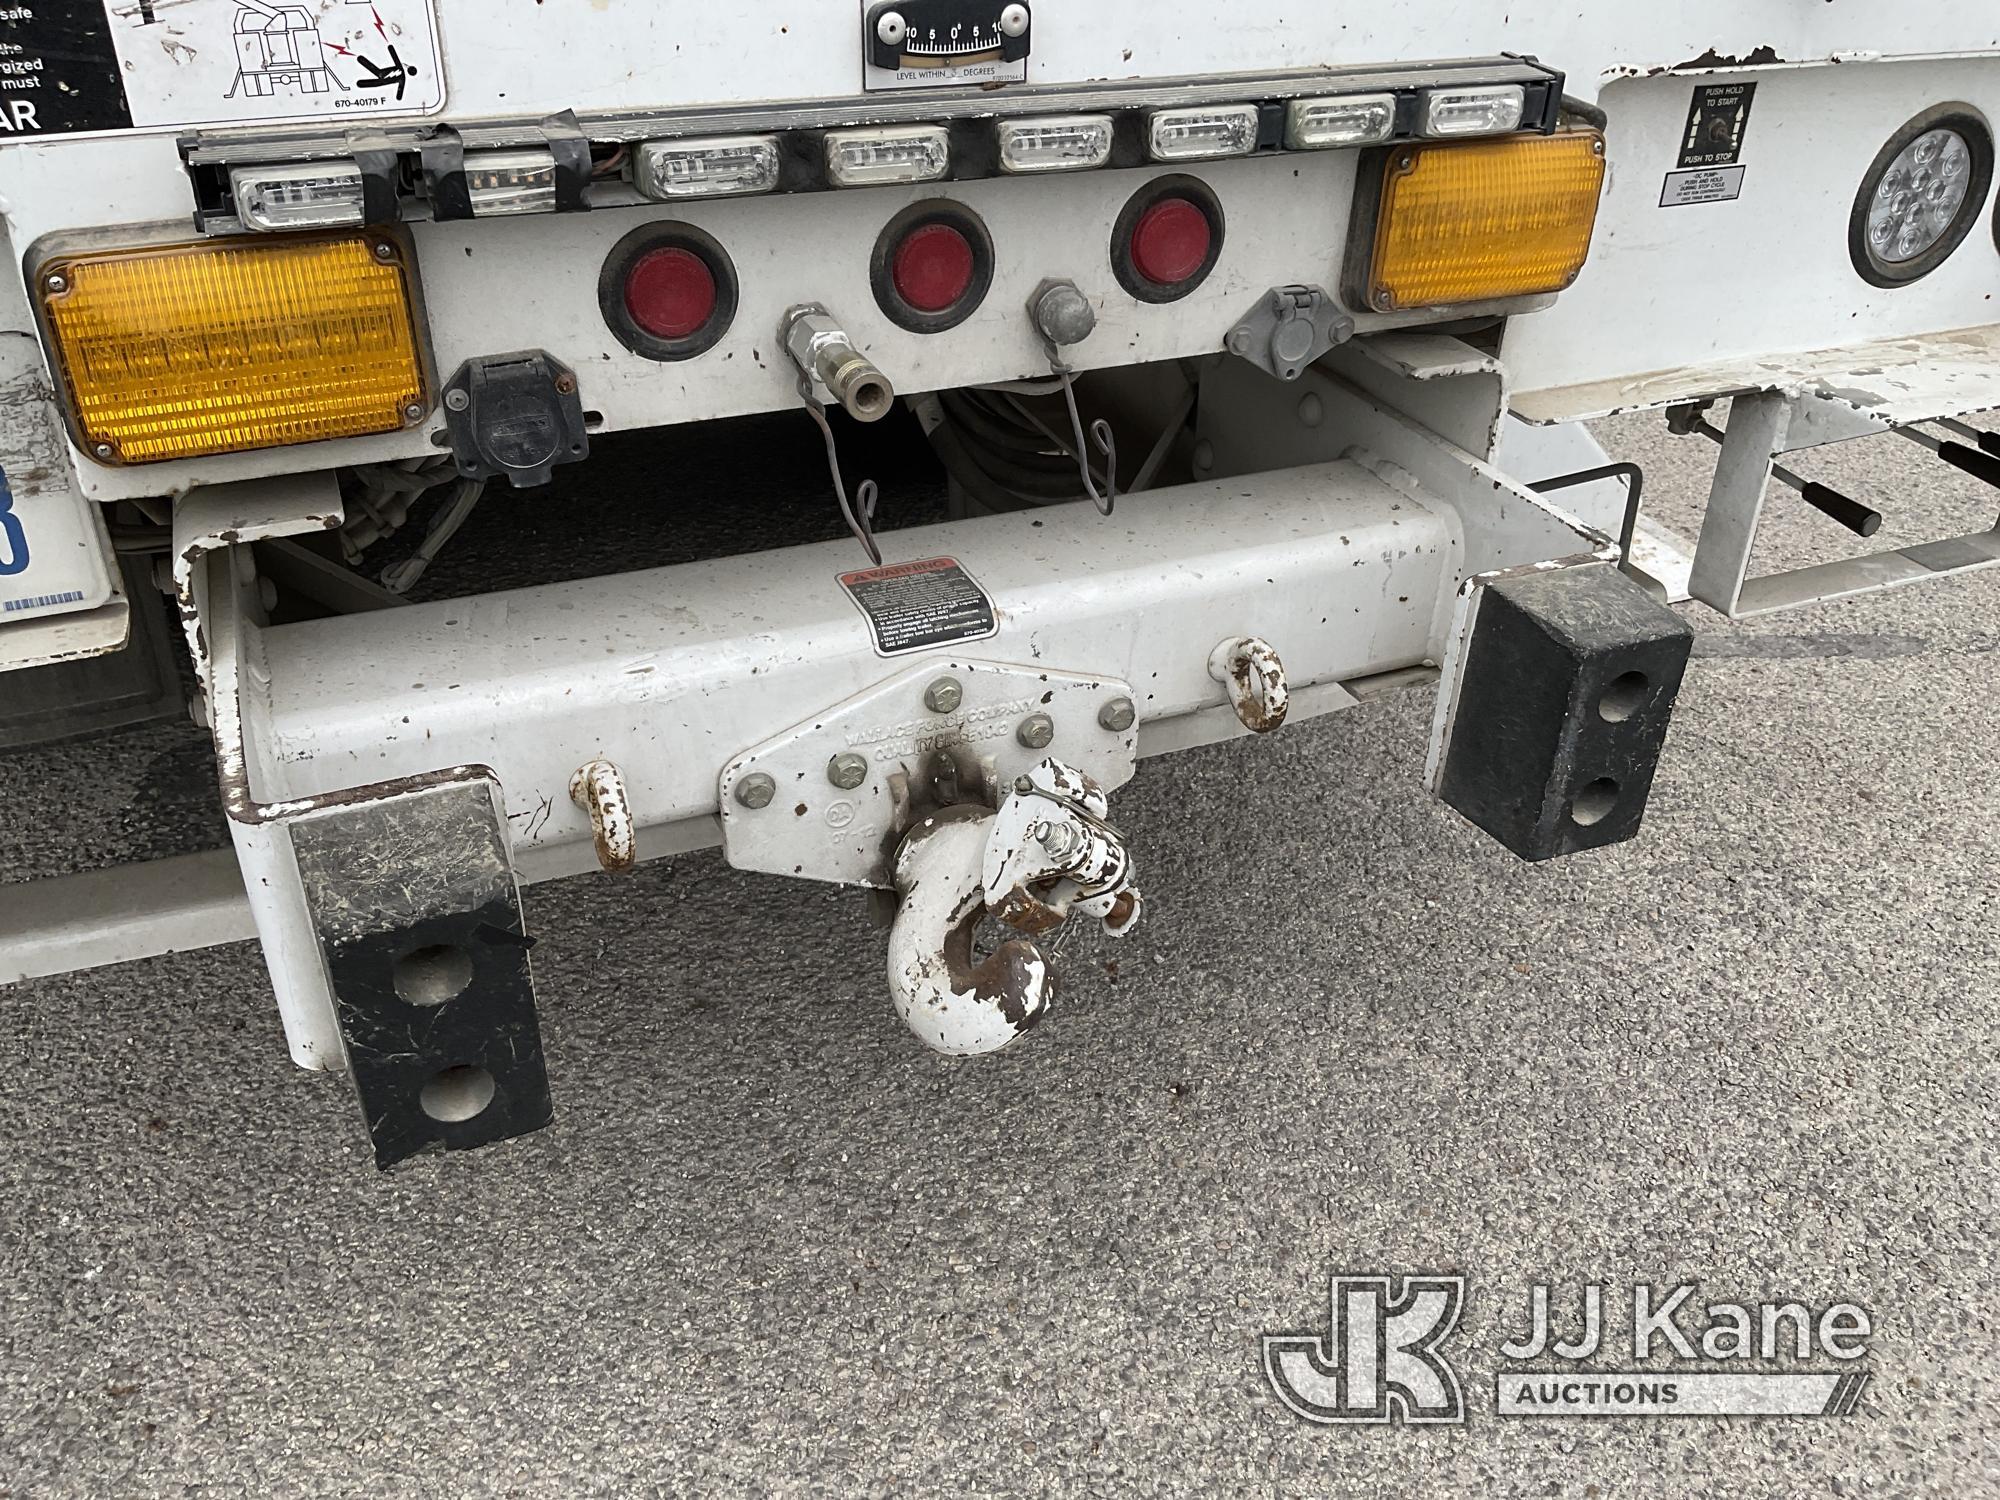 (Kerrville, TX) Altec AM55-MH, Over-Center Material Handling Bucket Truck rear mounted on 2013 Freig